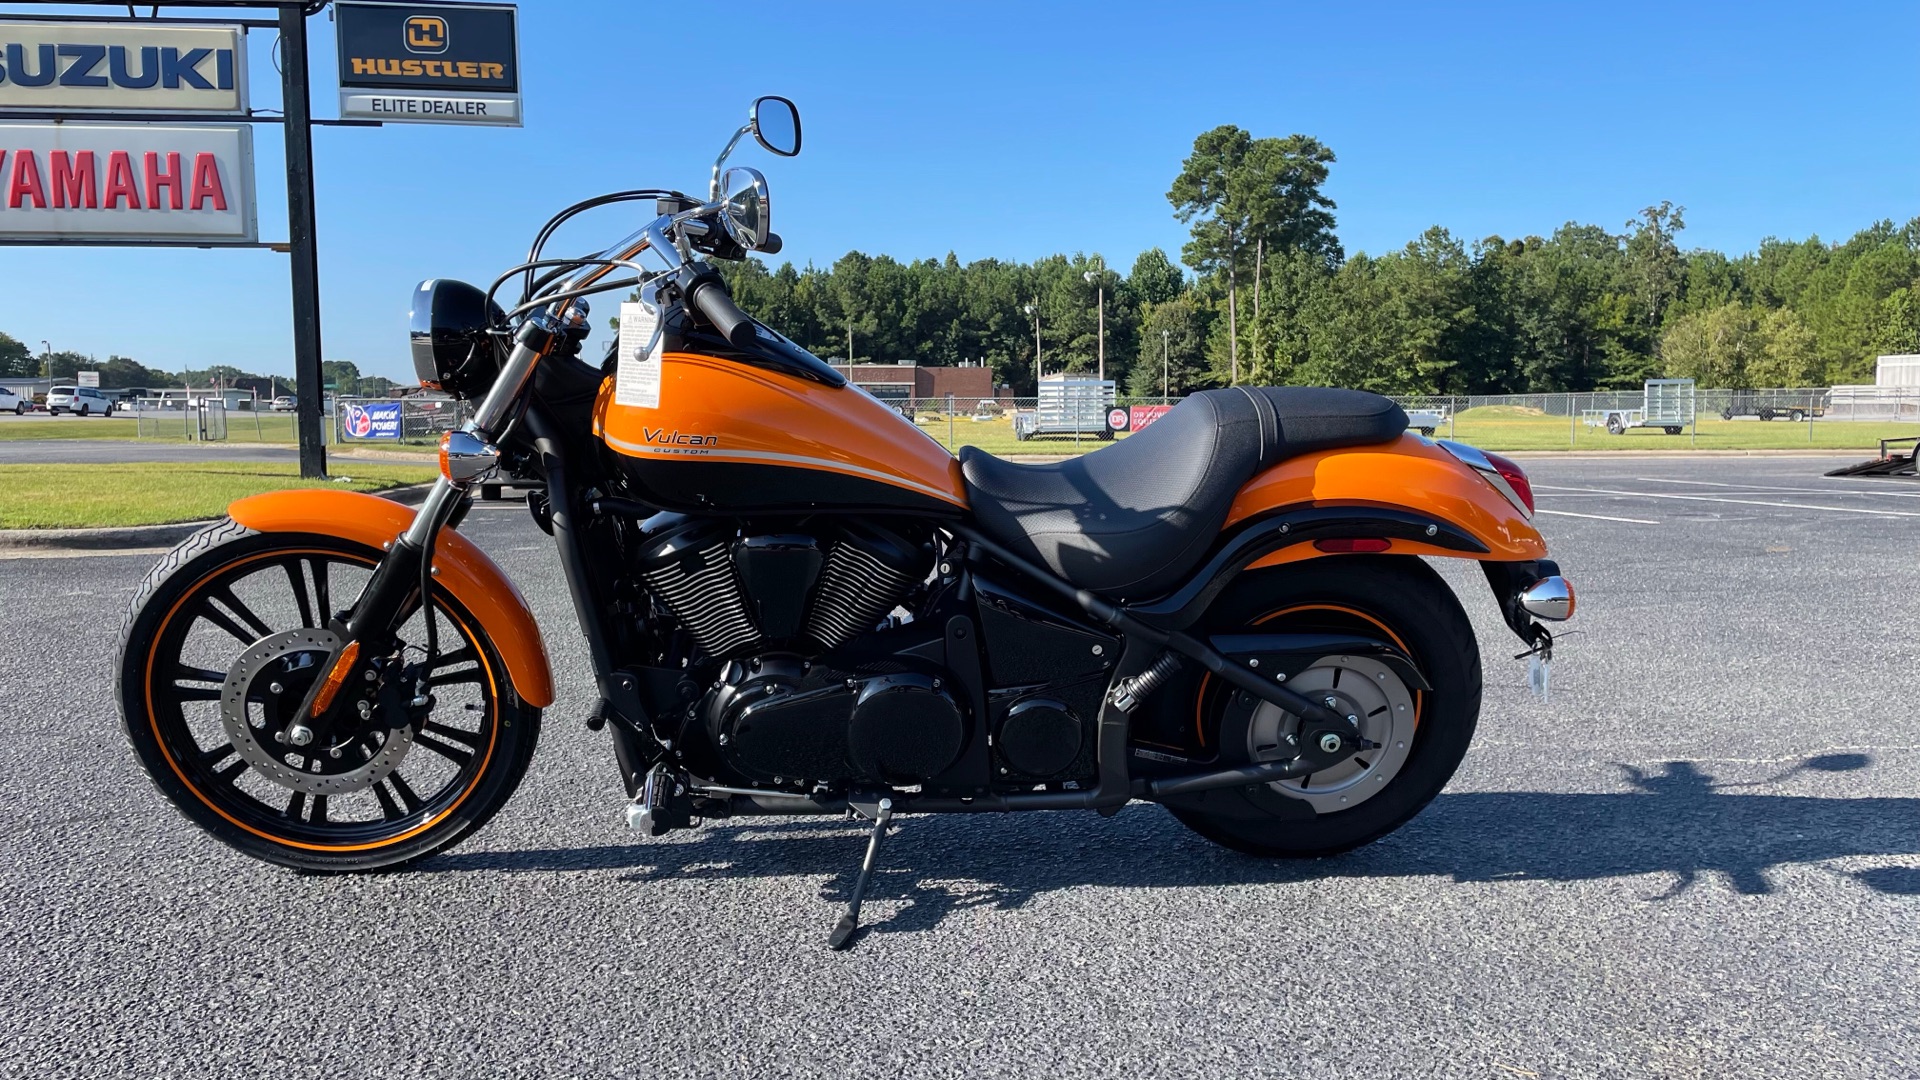 New 2021 Kawasaki Vulcan 900 Custom Motorcycles In Greenville Nc Stock Number N A